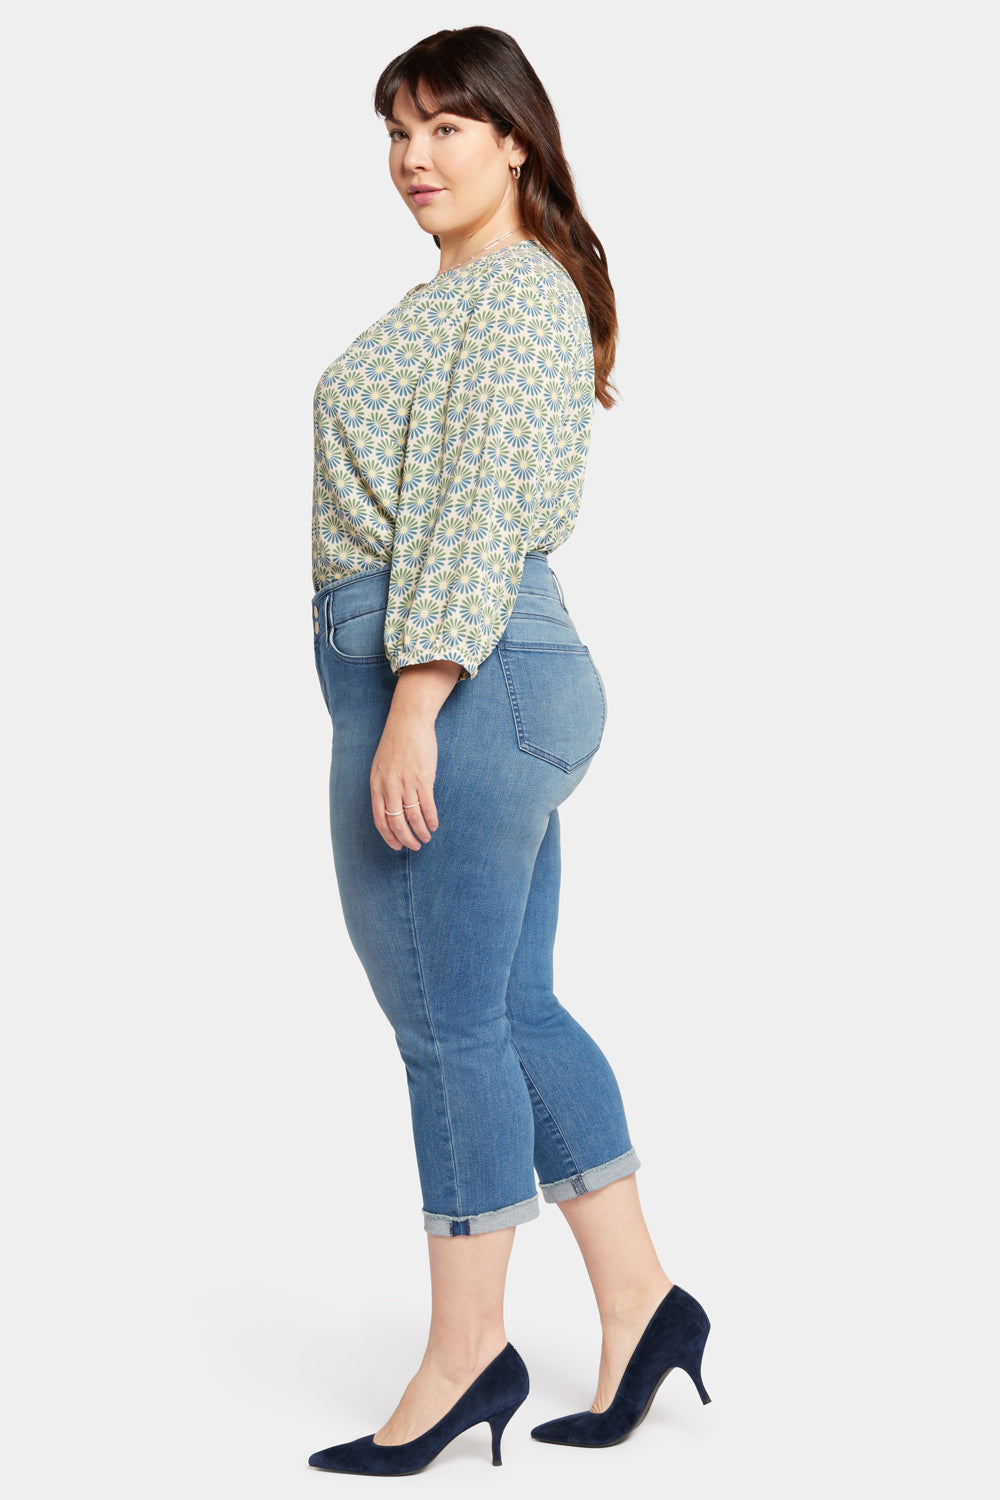 NYDJ Chloe Capri Jeans In Plus Size With Cuffs - Stargazer